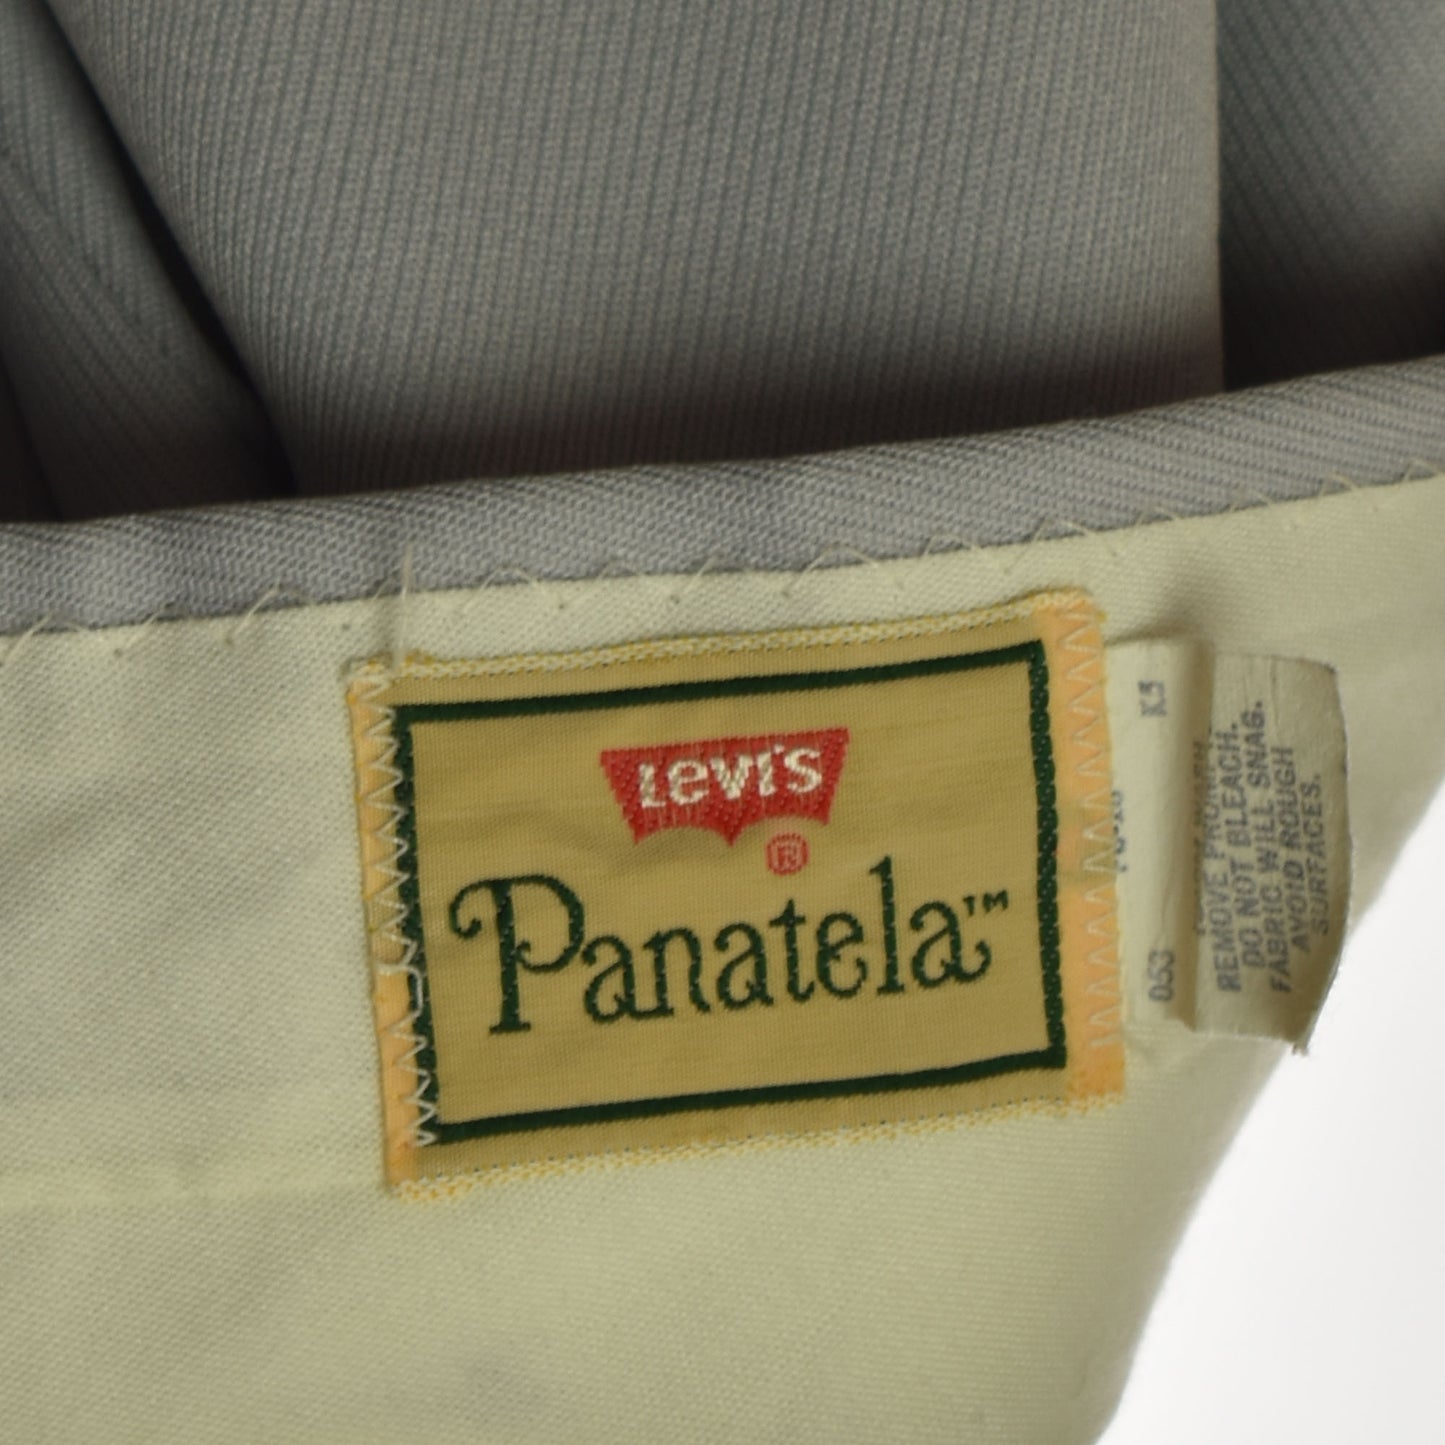 Vintage 70s Leisure Suit by Levi's Panatela - Pearl Snap - Pants Suit Set in Baby Blue